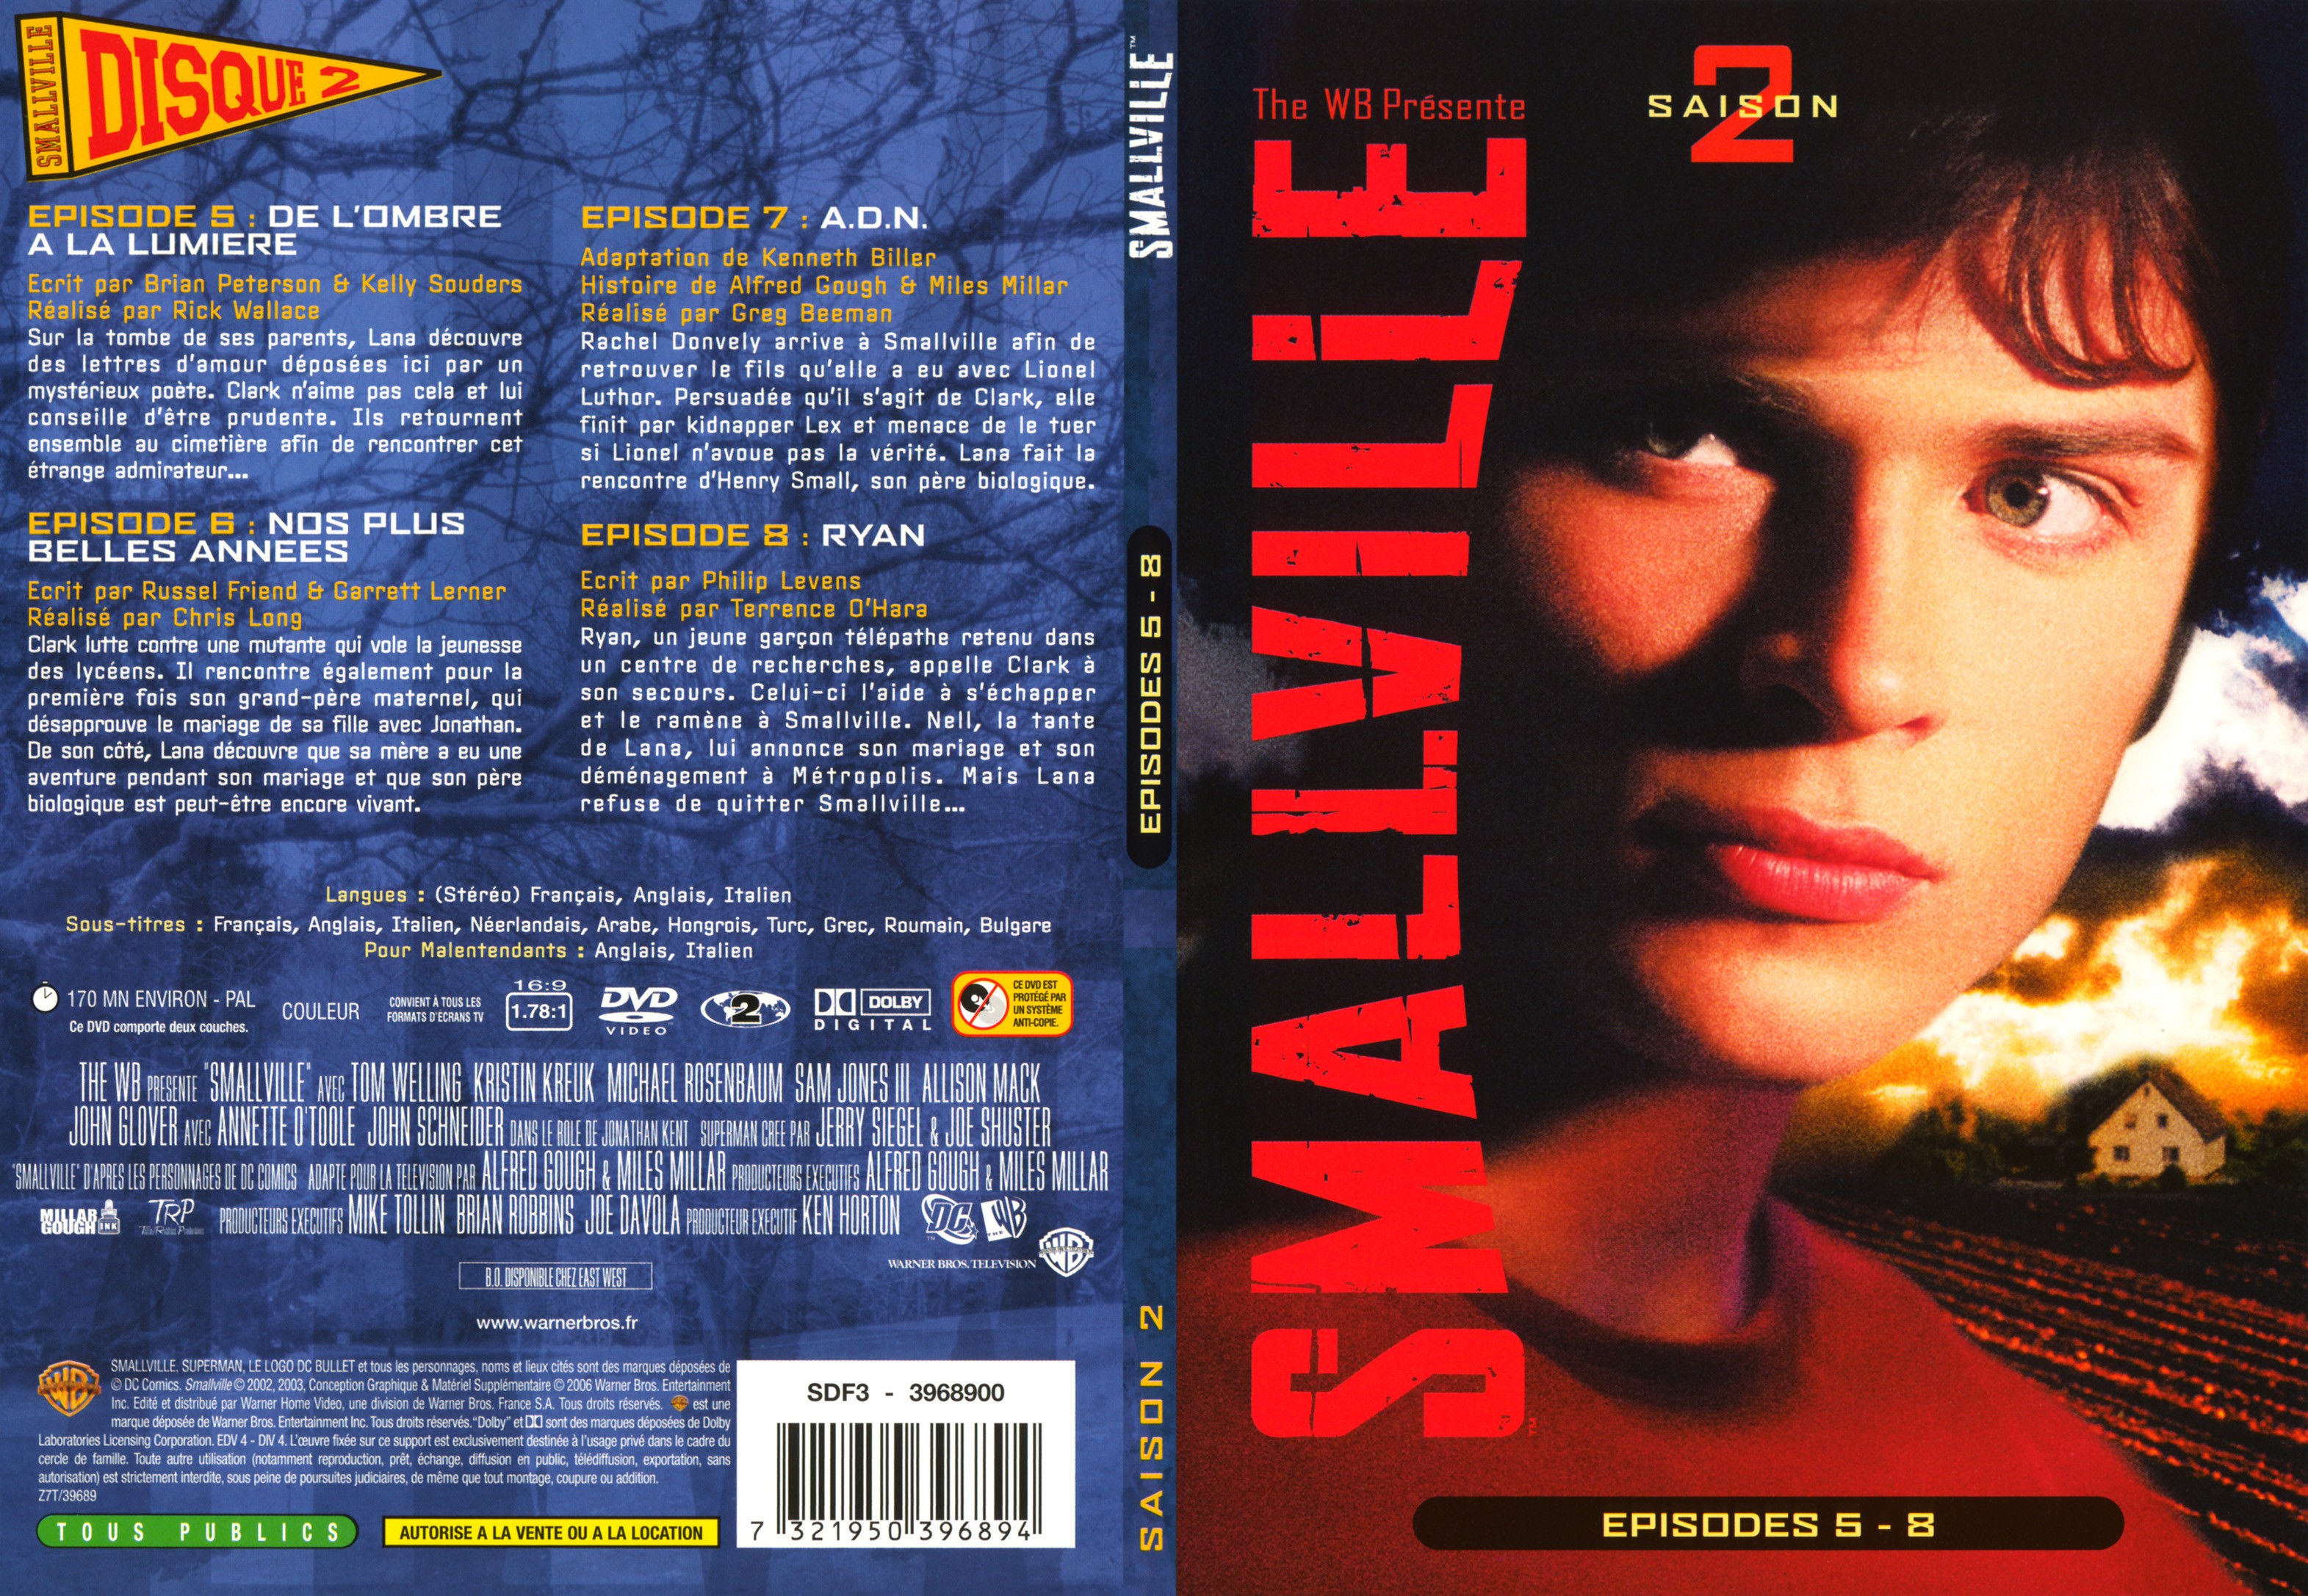 Jaquette DVD Smallville saison 2 DVD 2